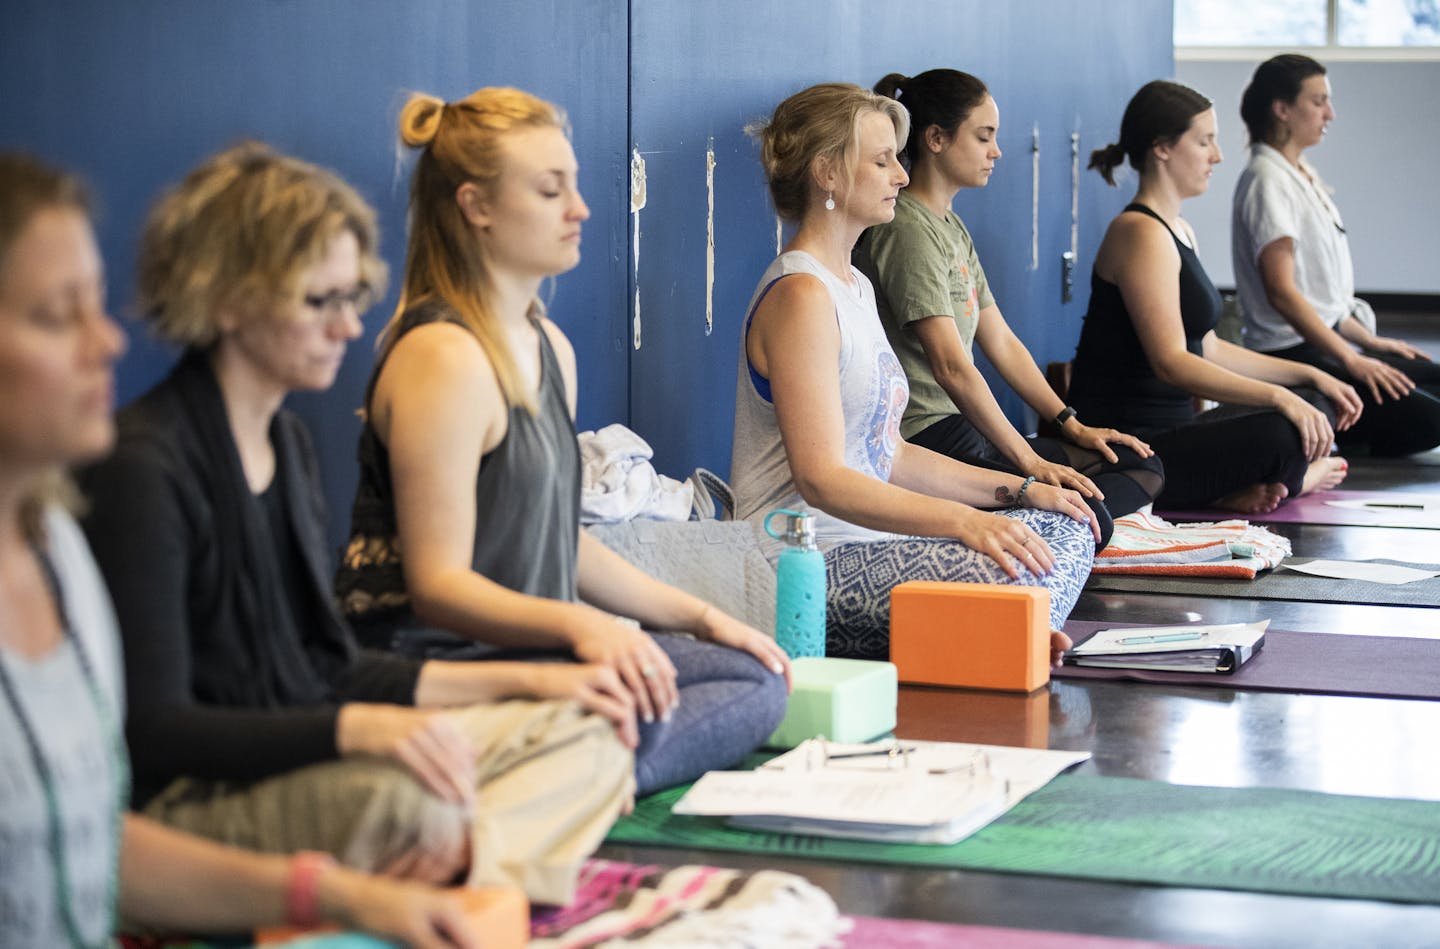 Minnesota Yoga Teacher Training Program — Yoga Sanctuary Minneapolis